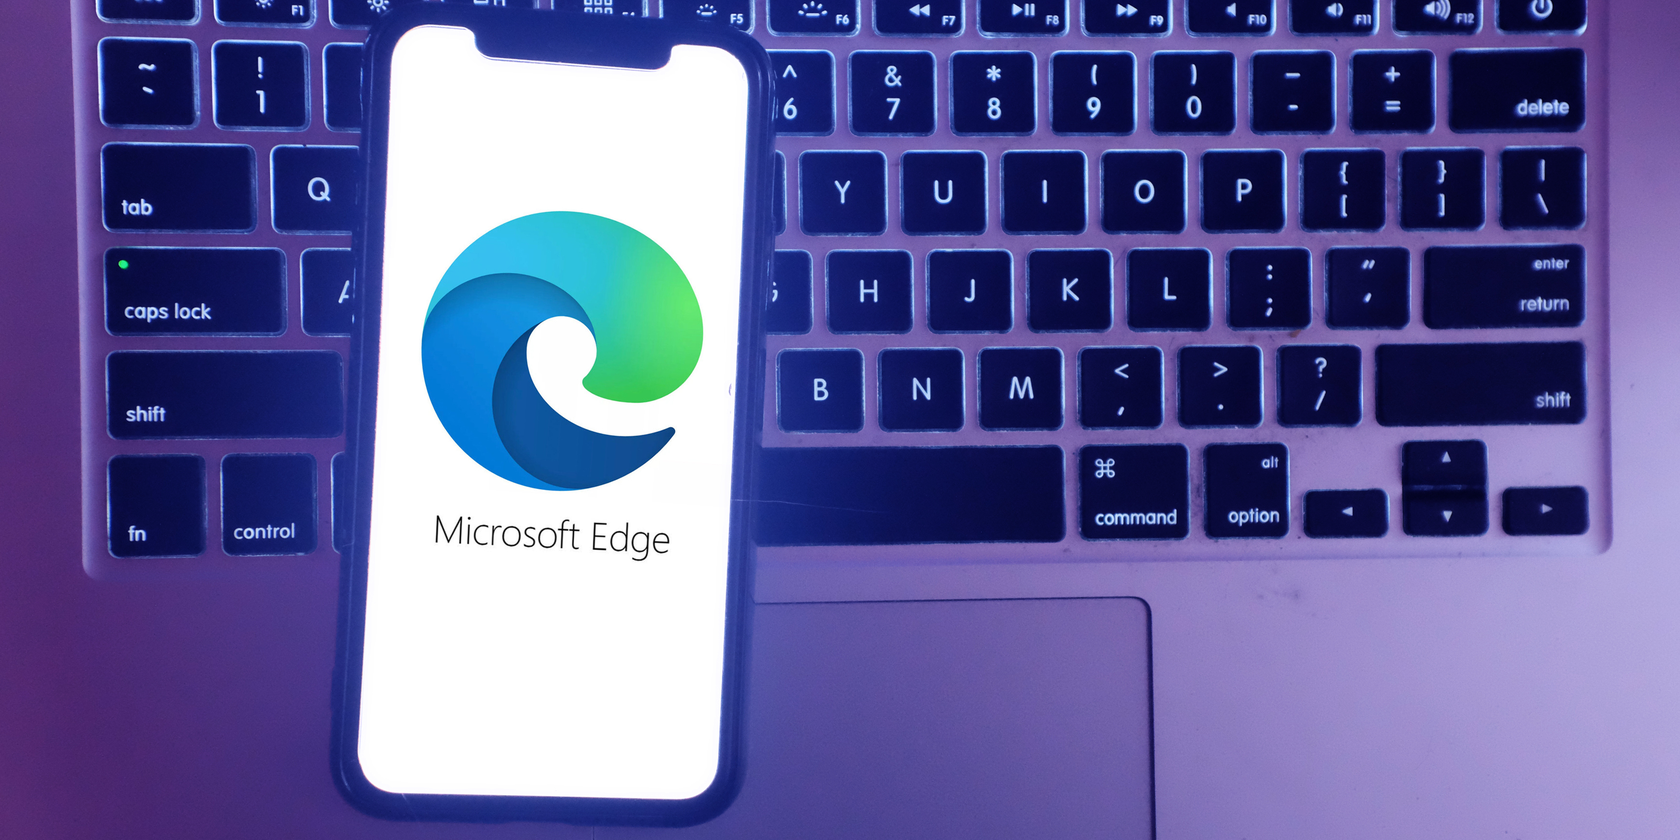 Microsoft Edge on mobile